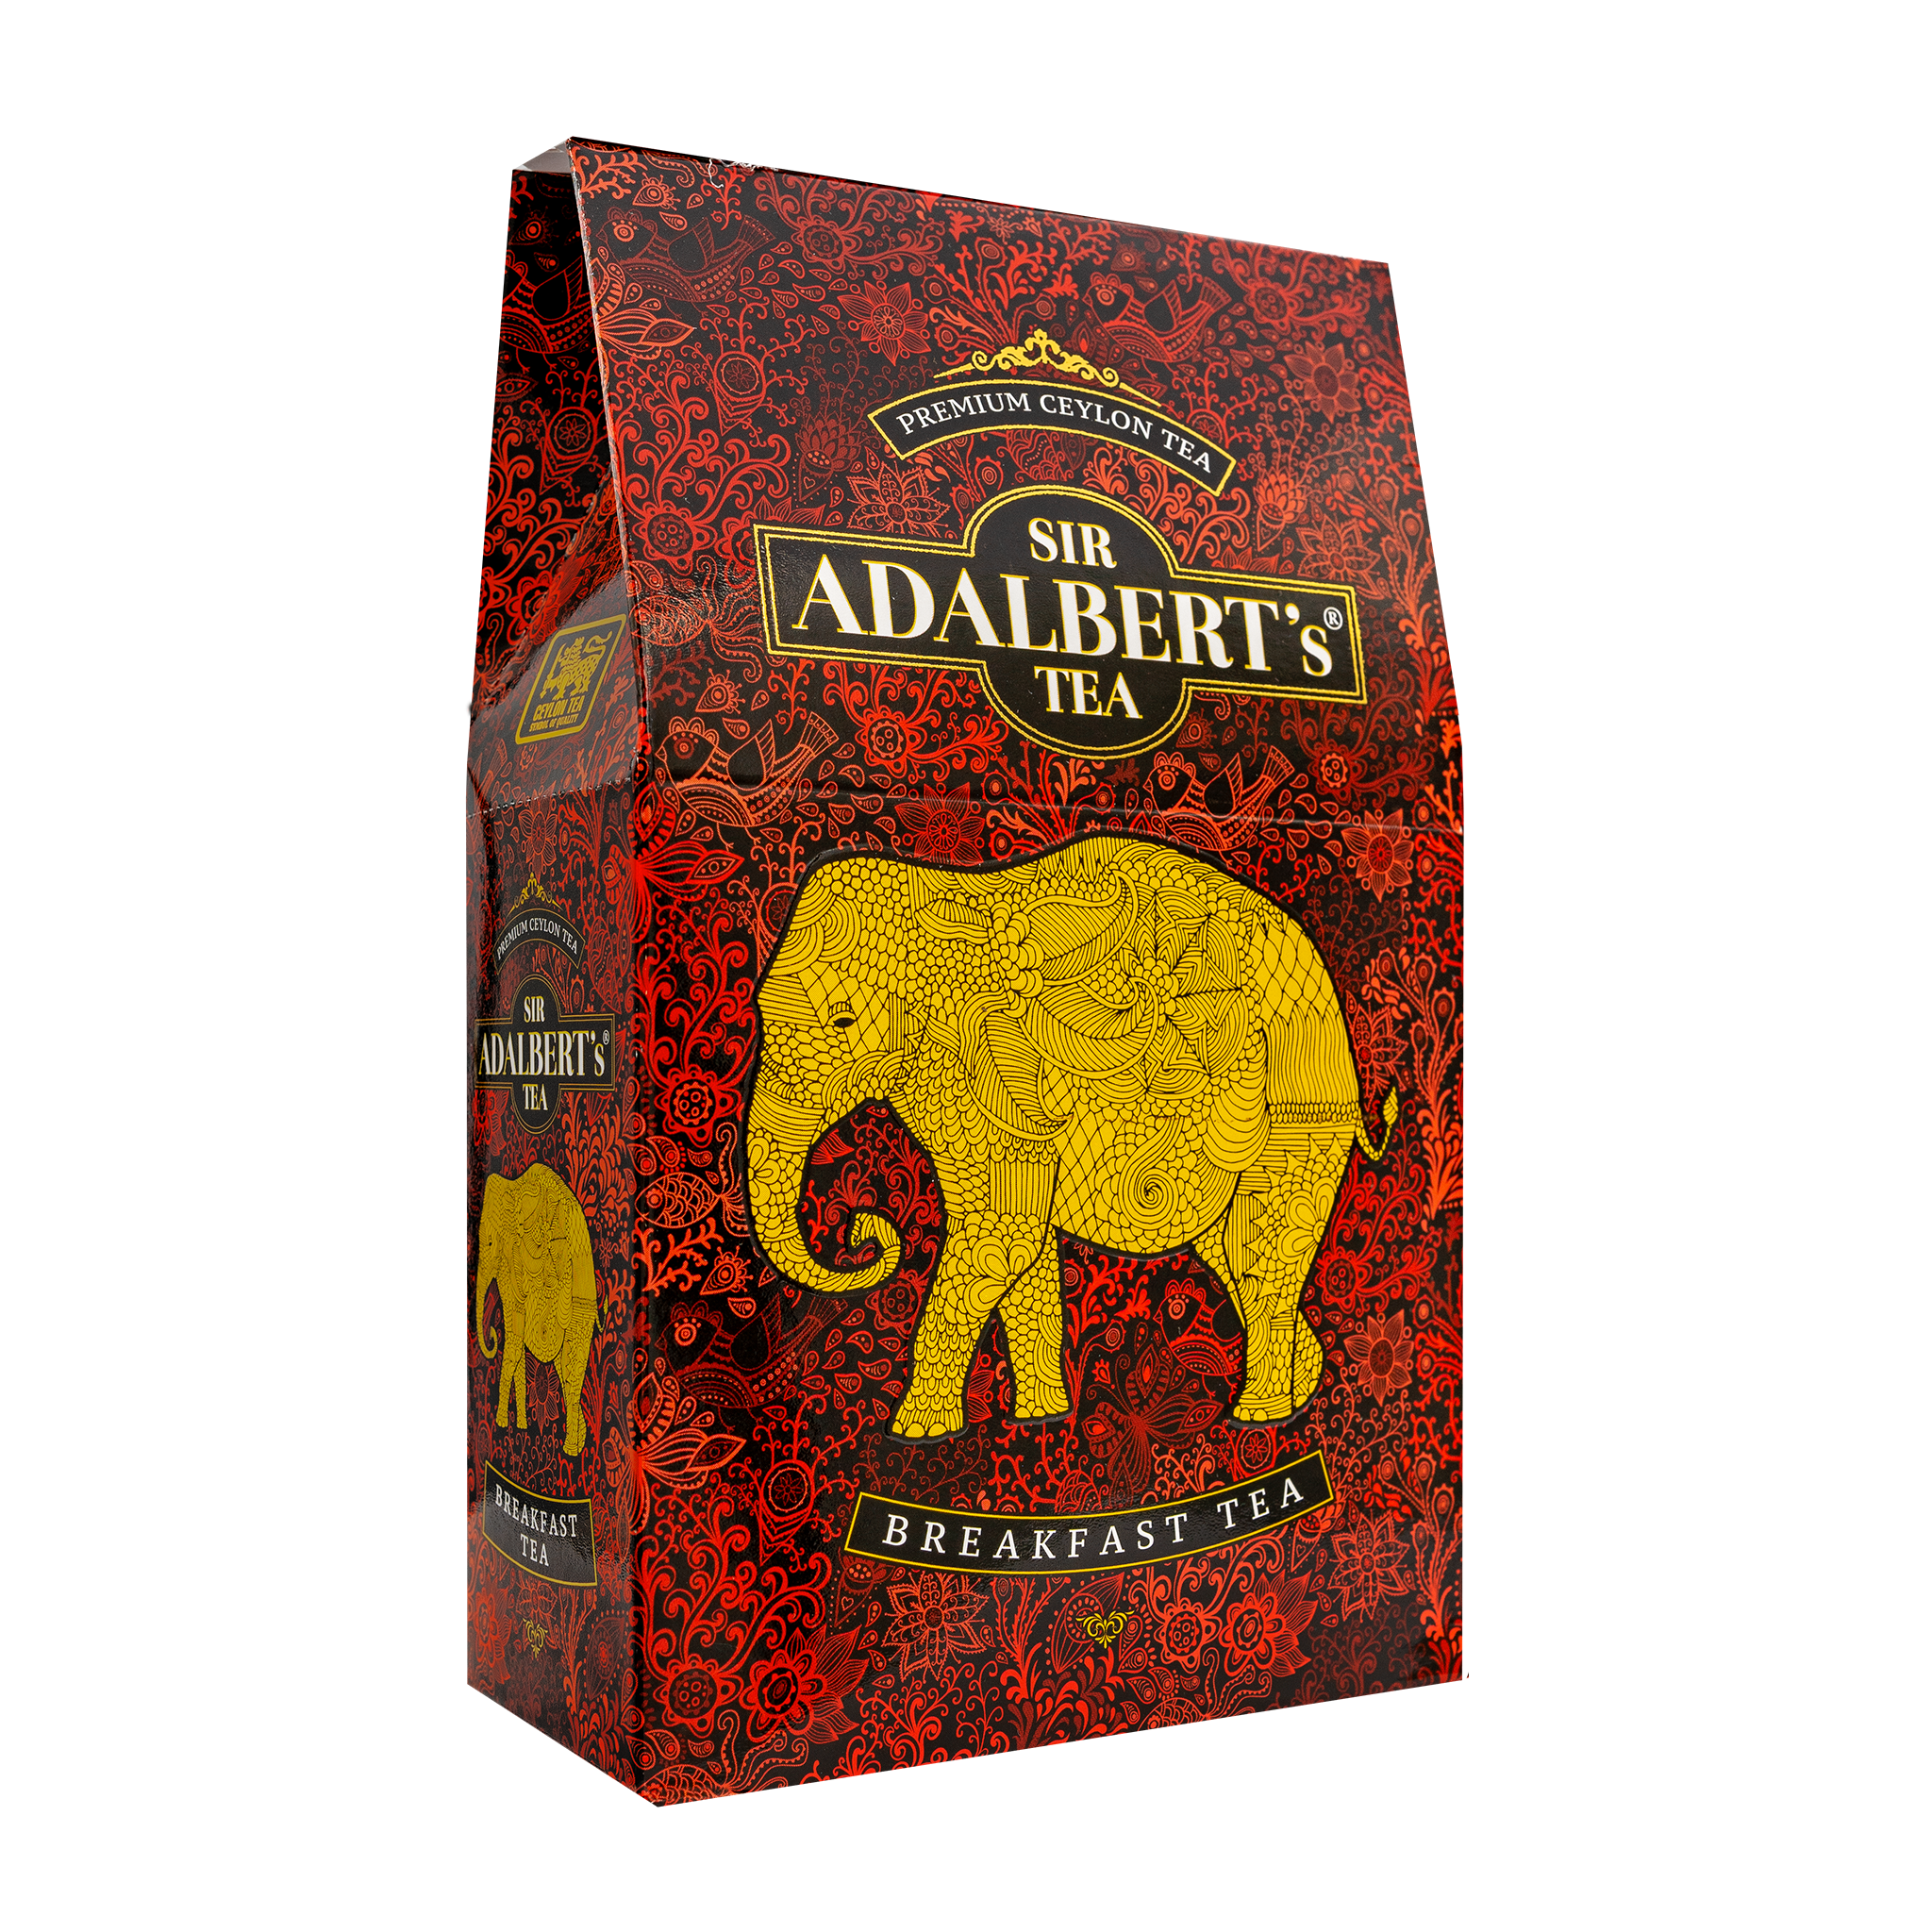 Adalbert's Tea ENGLISH BREAKFAST TEA - leaf 100g pouch